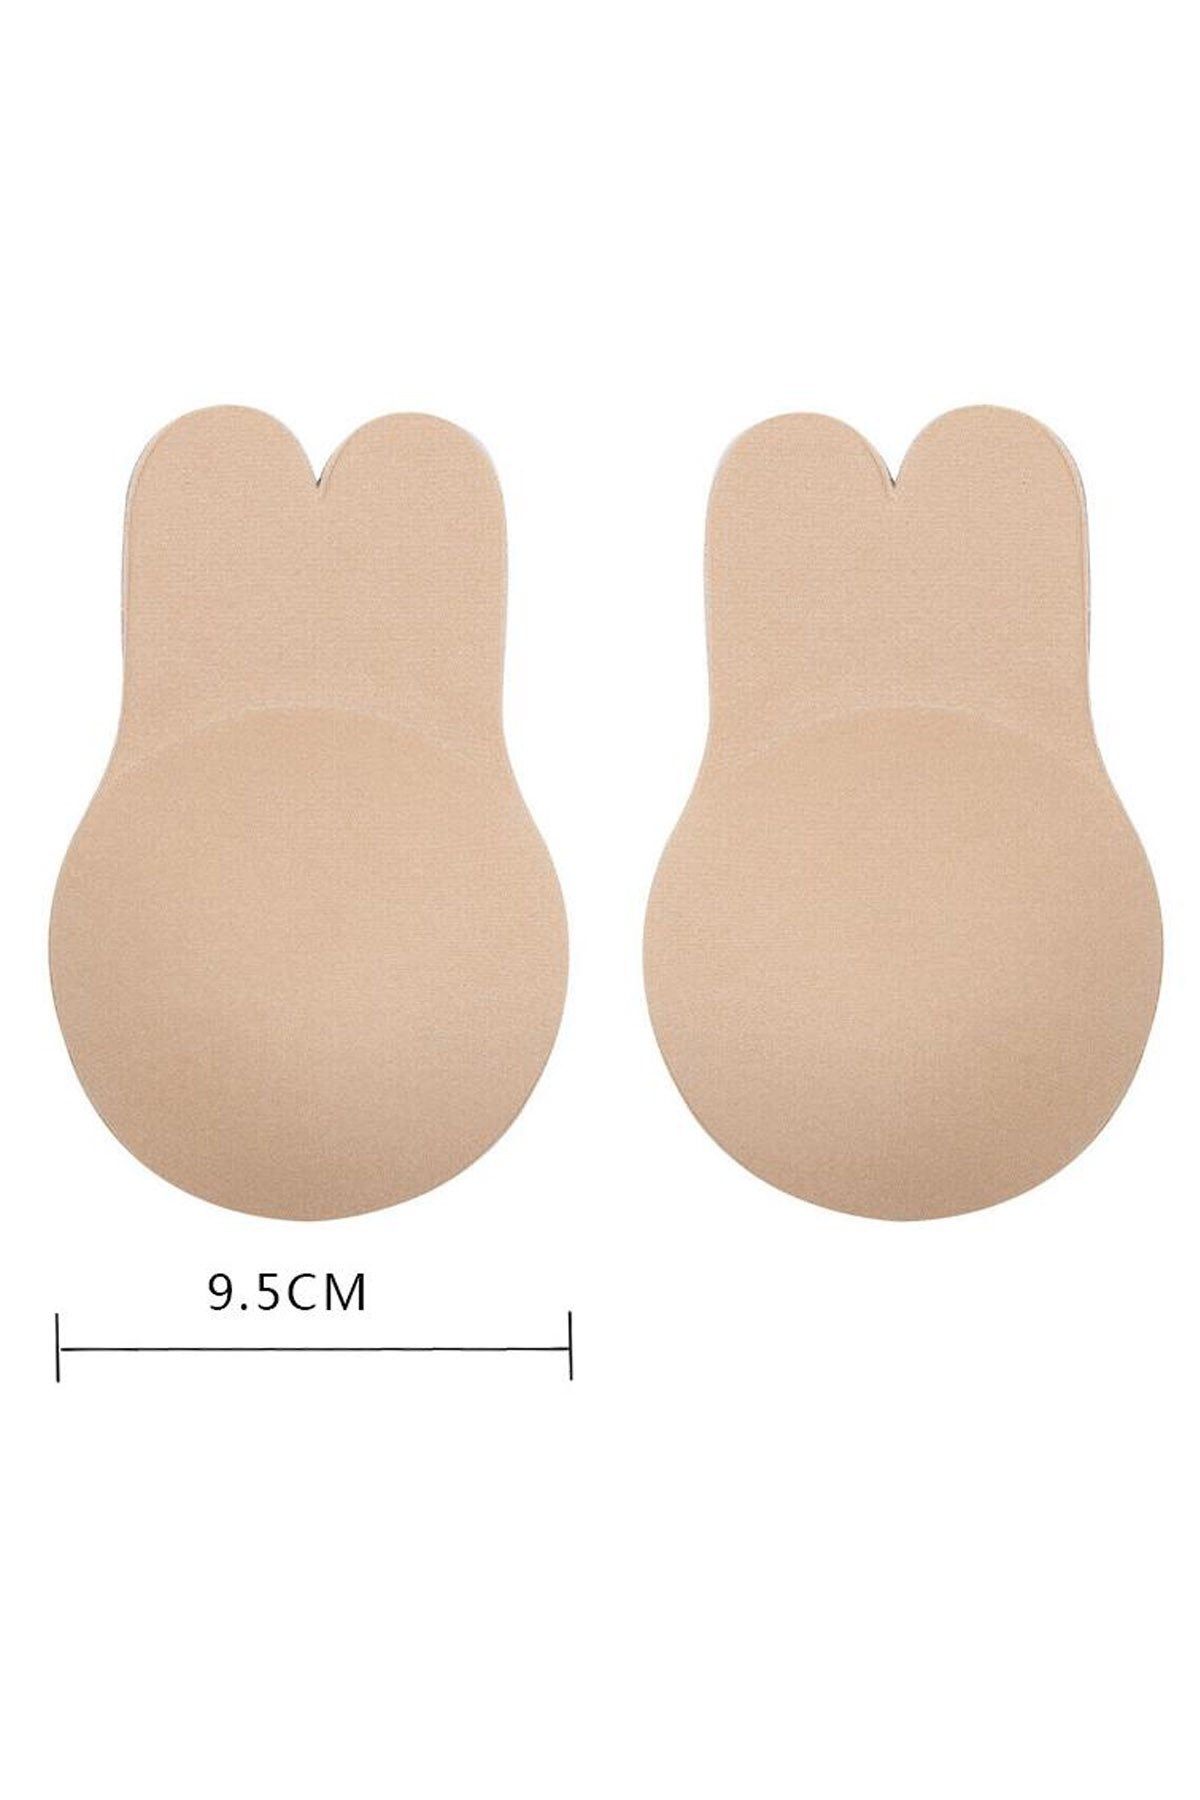 Invisible Breast Lift Up Bra Pad Tape Silicone Cover S-XL SALE